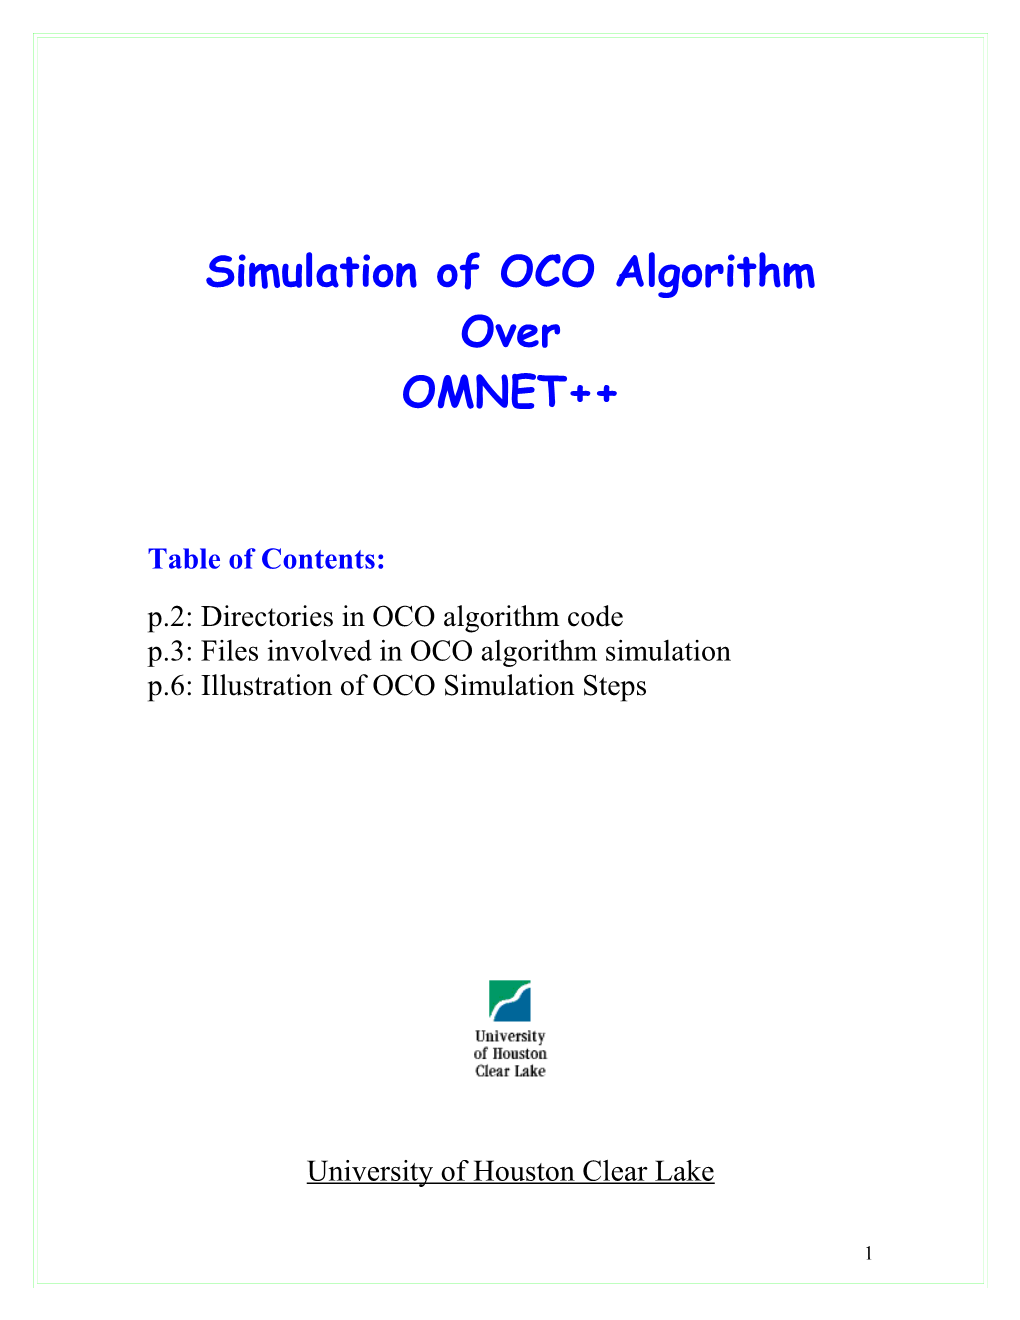 OCO Simulation Tutorial